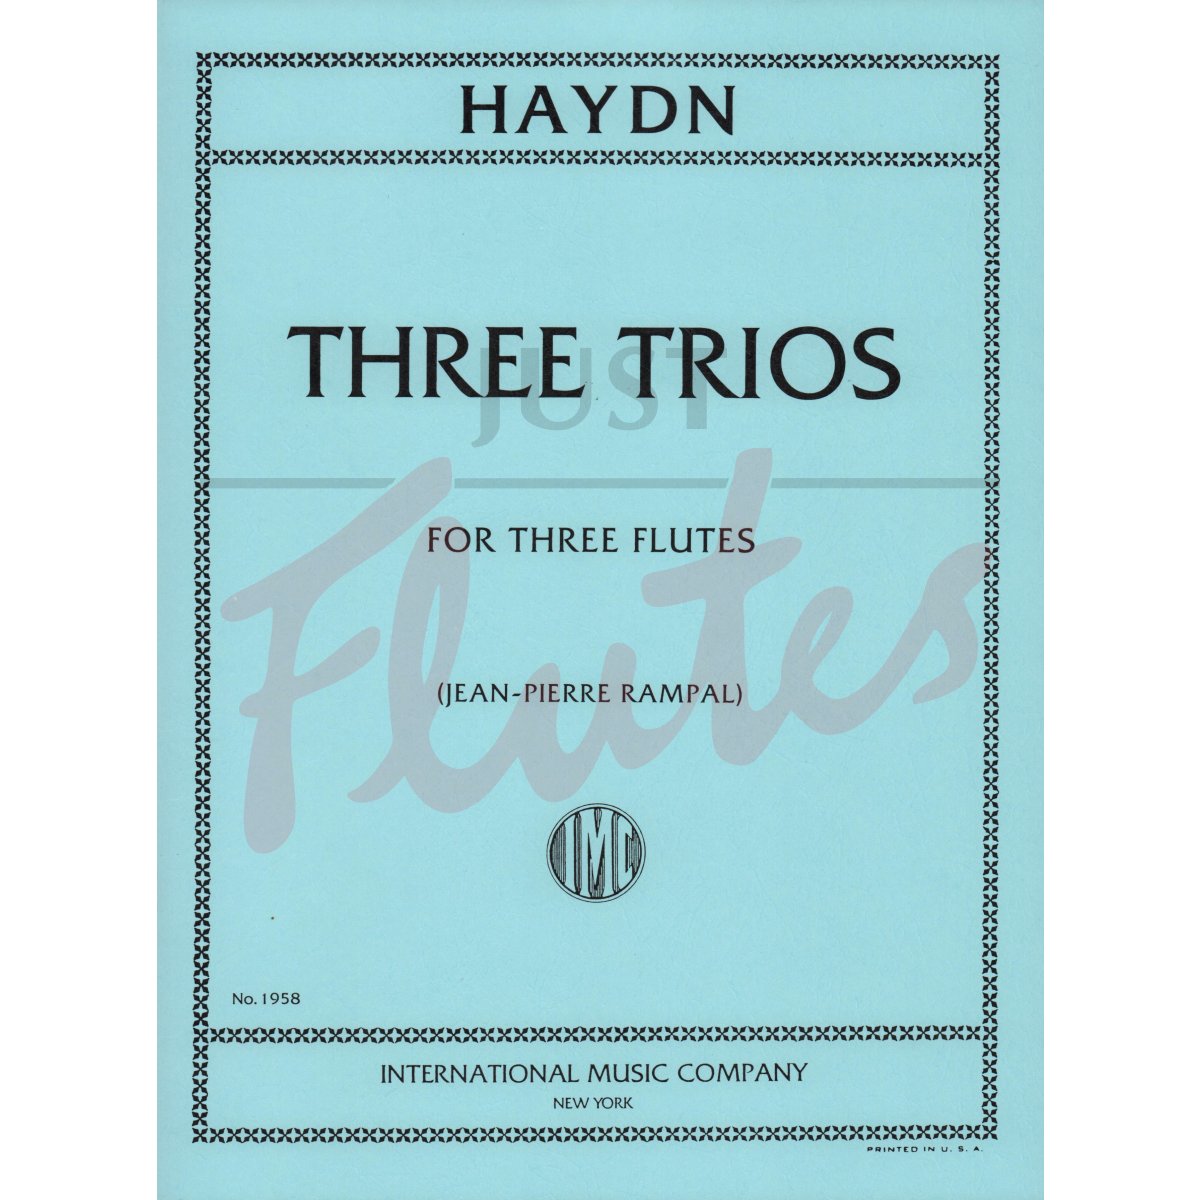 Three Trios for Three Flutes